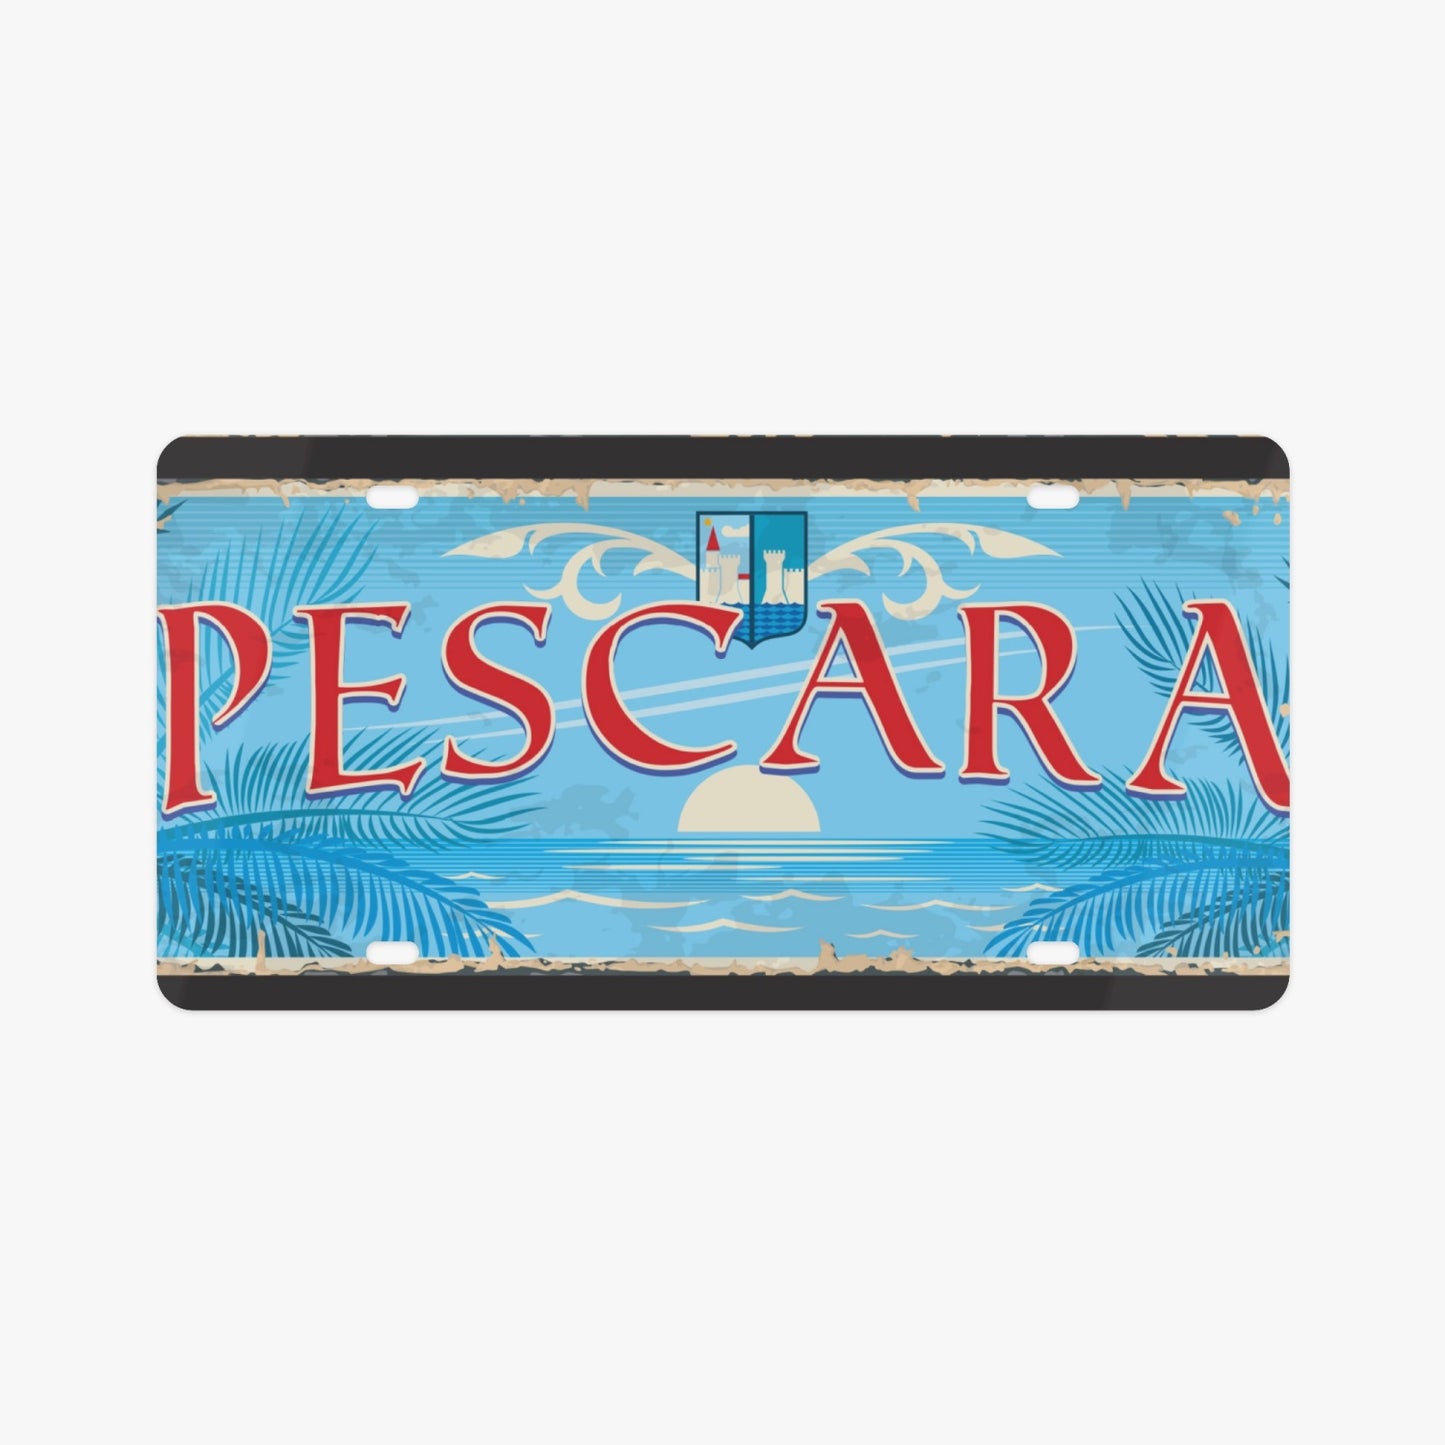 Pescara License Plate Italian Style